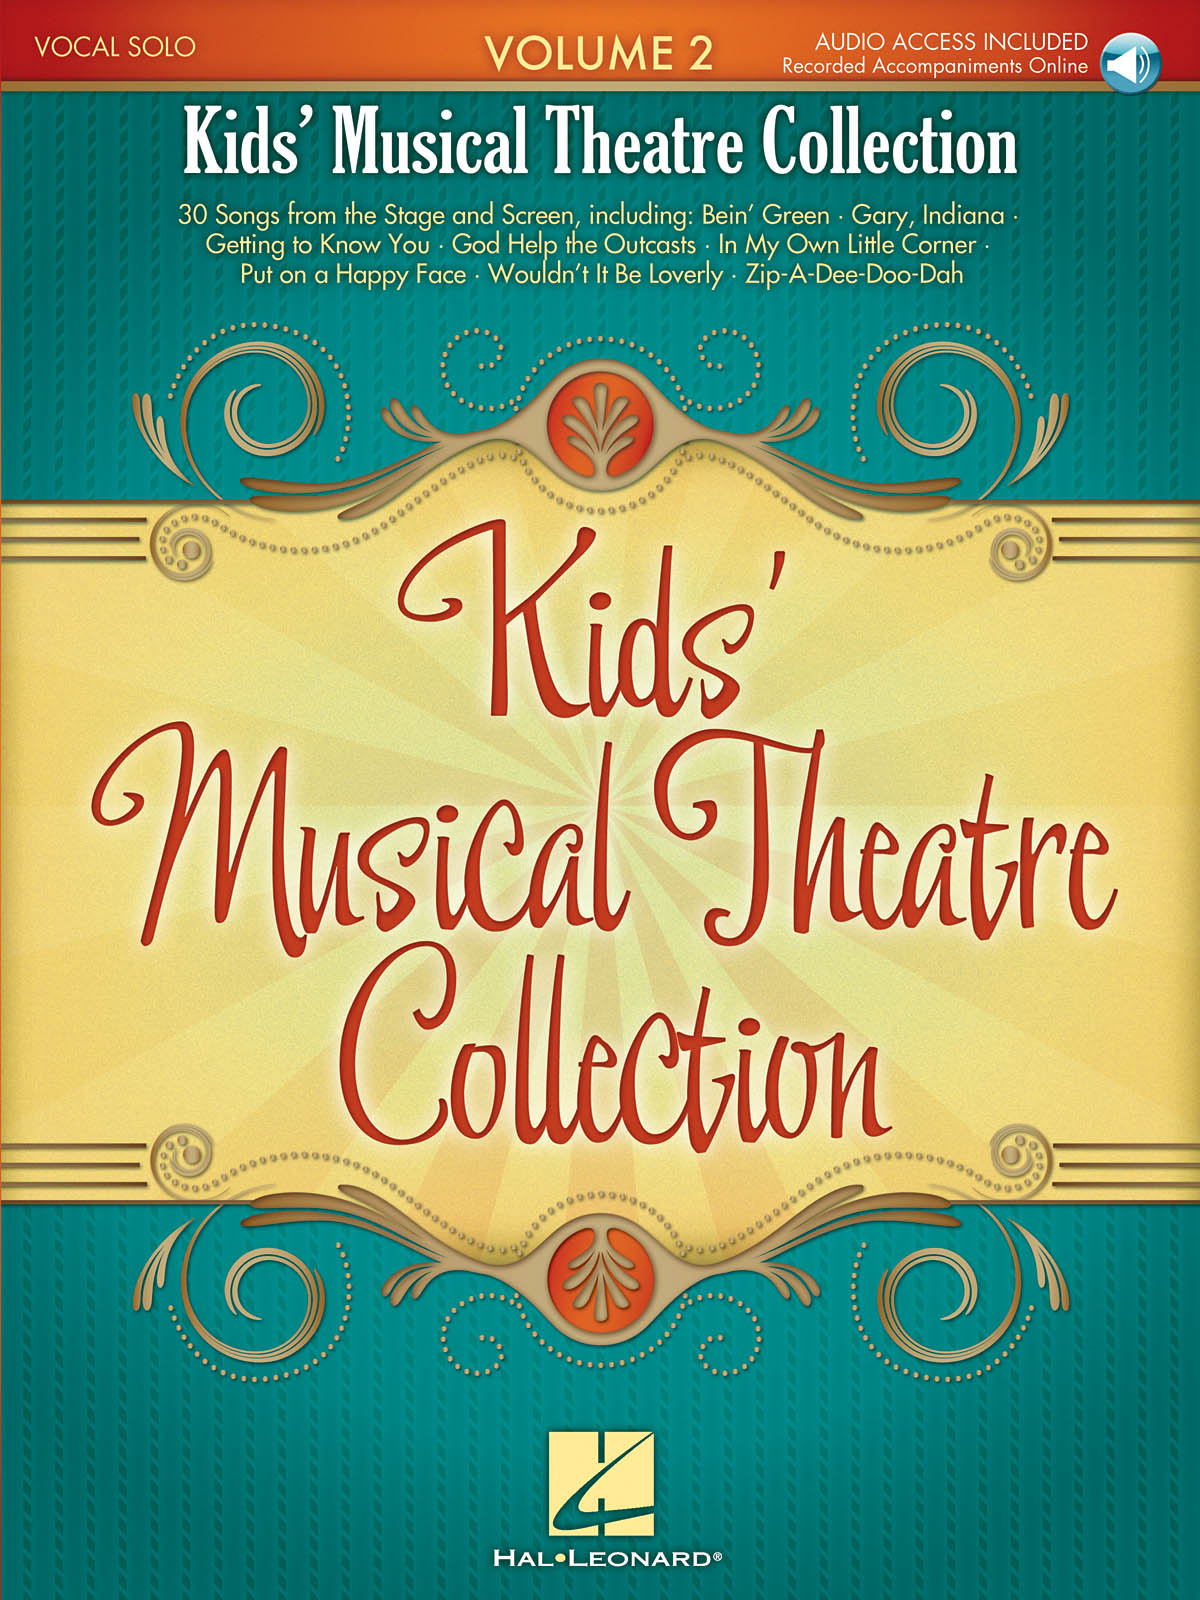 Kids' Musical Theatre Collection - Volume 2: Vocal Solo: Vocal Album